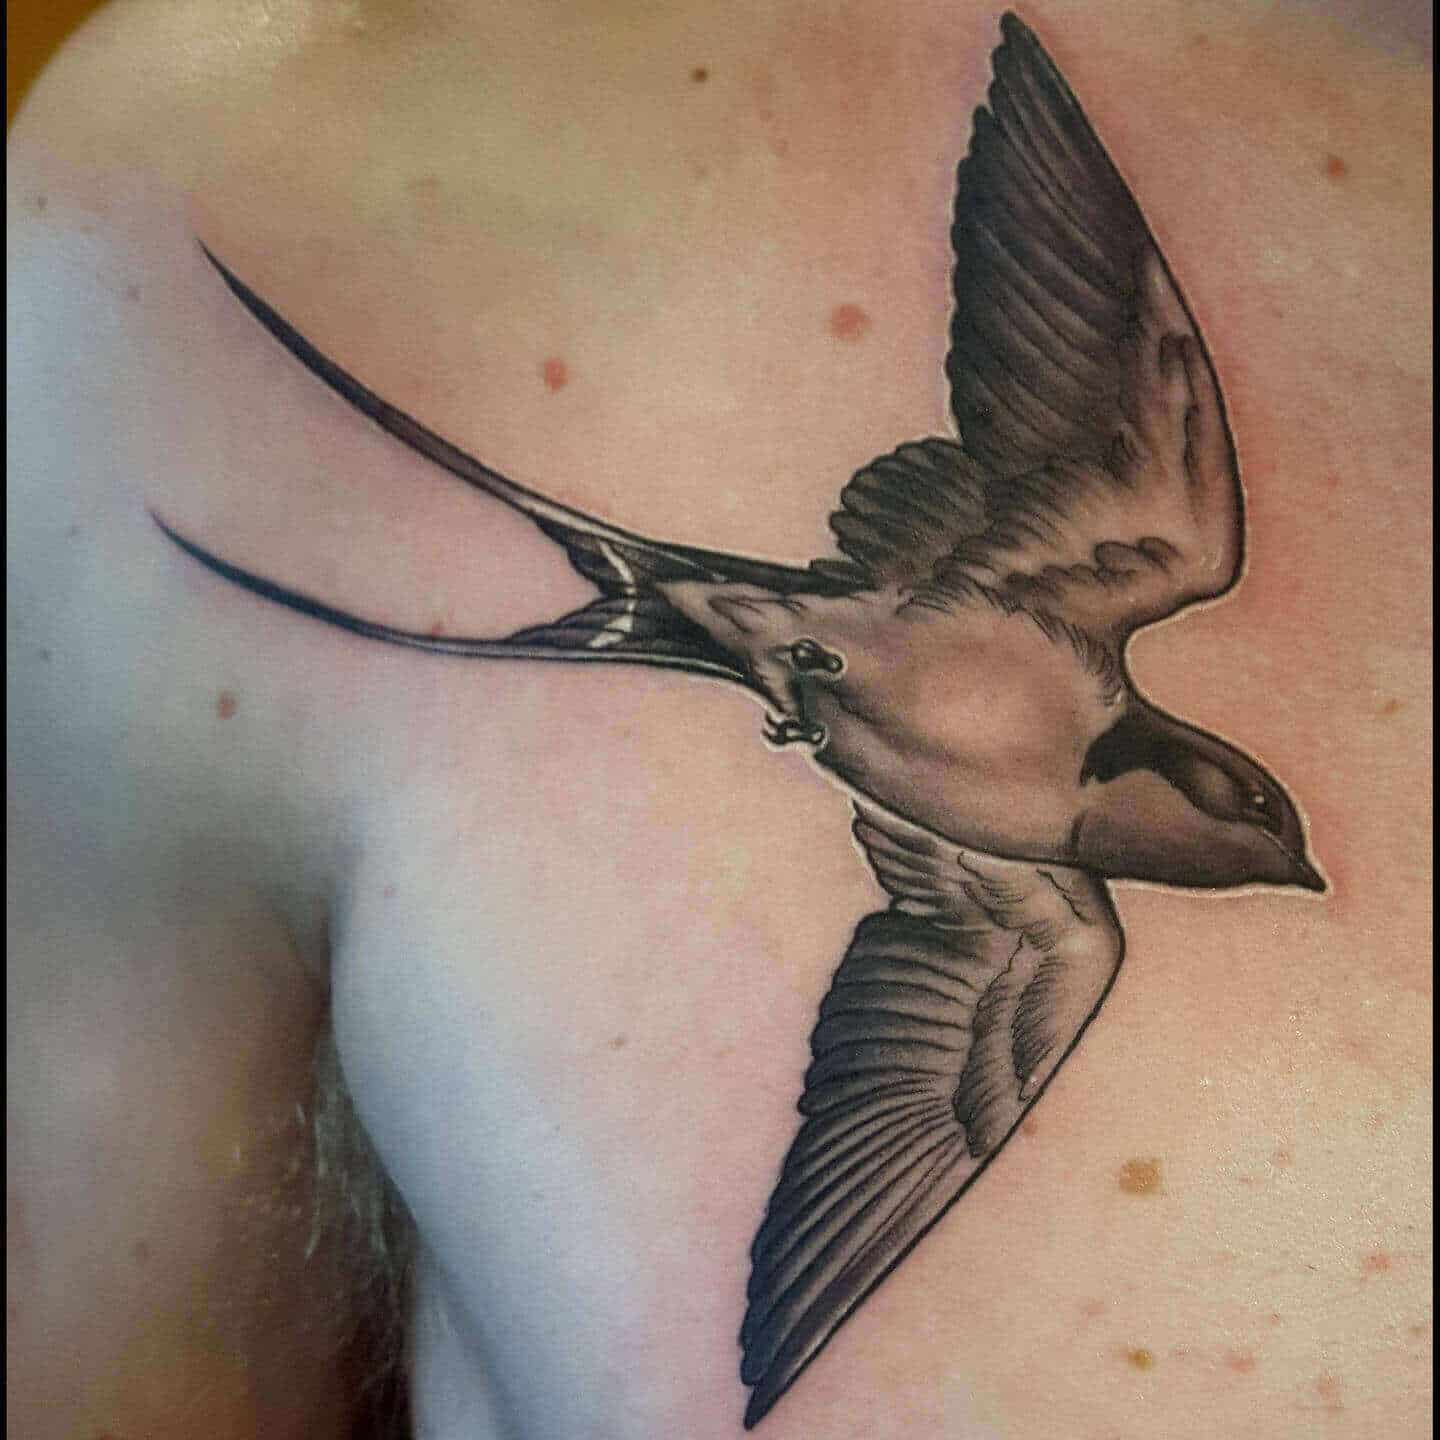 sailor jerry sparrow tattoo on chest